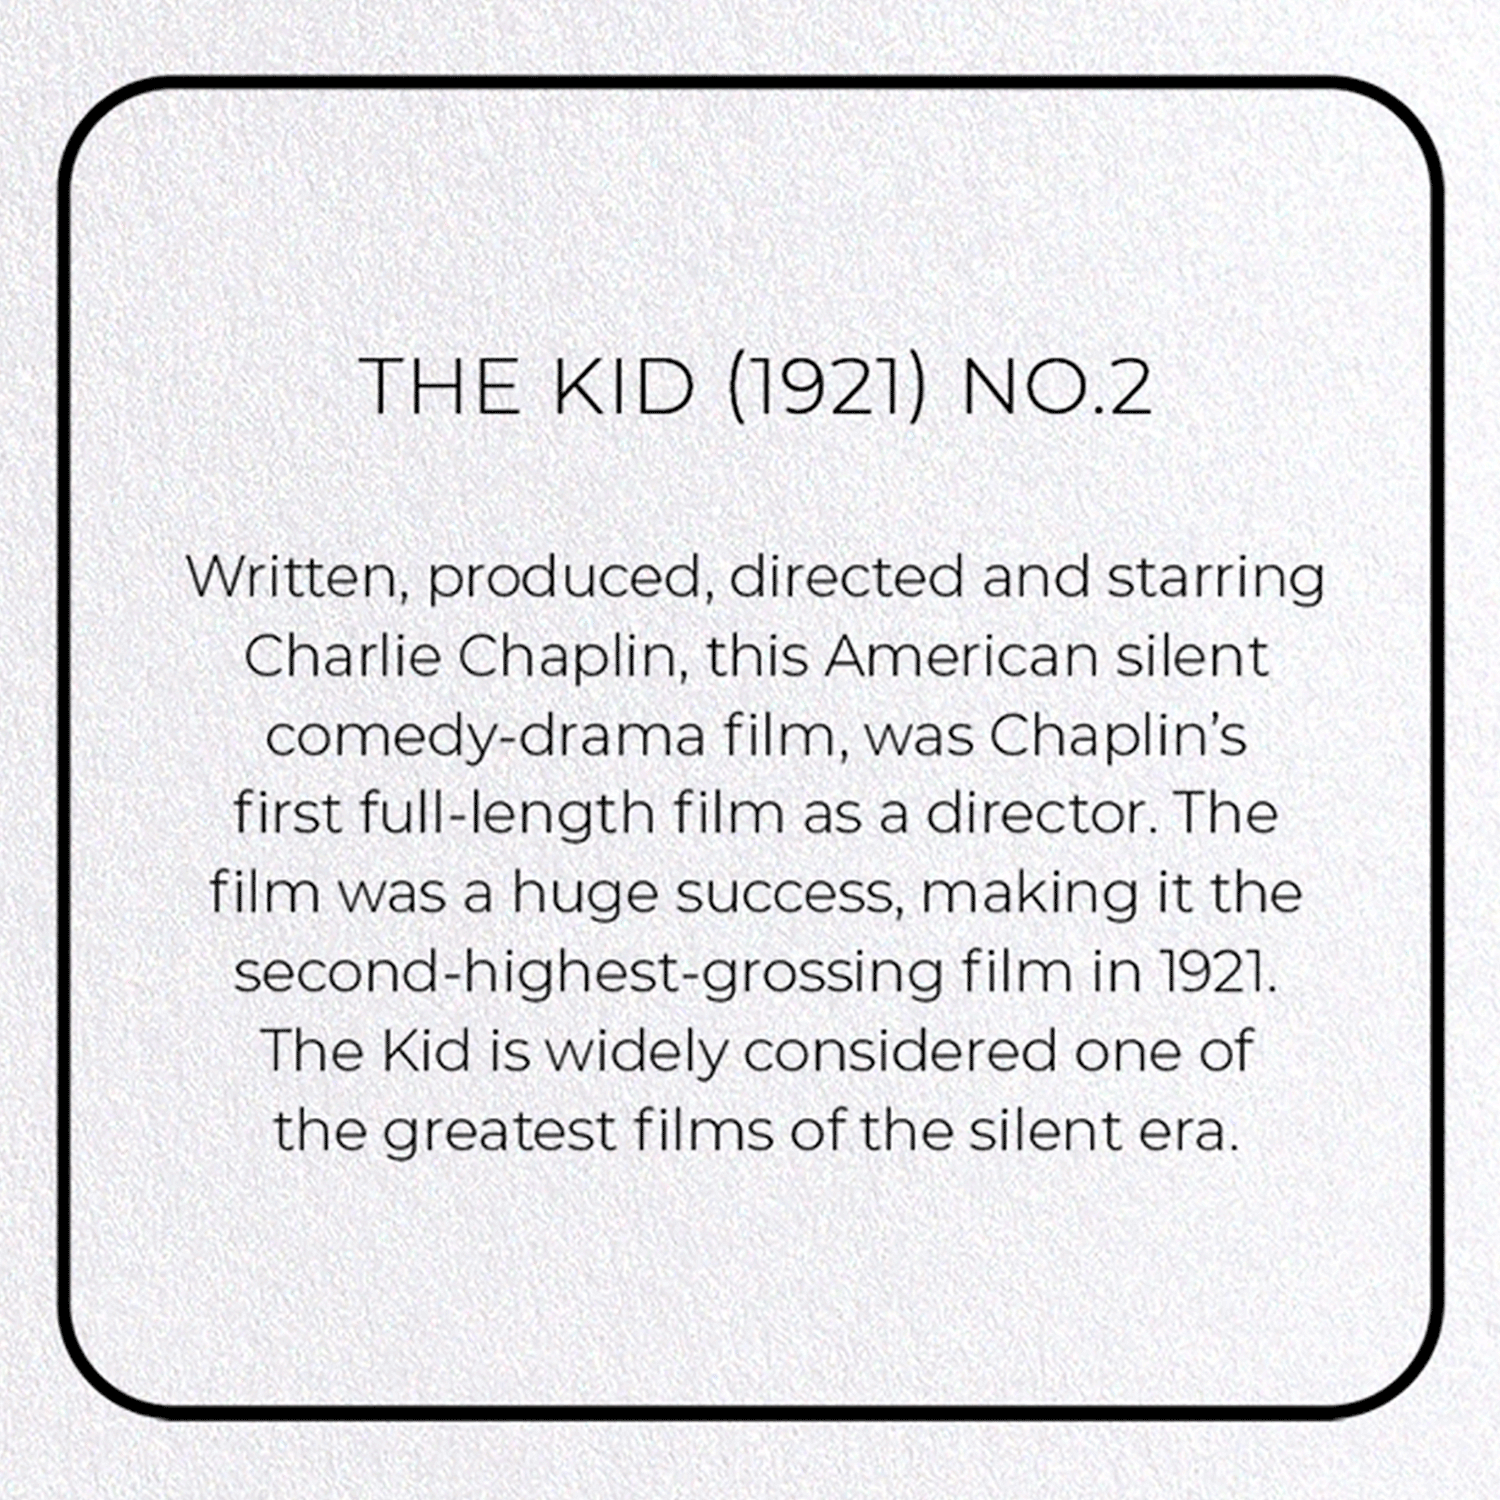 THE KID (1921) NO.2